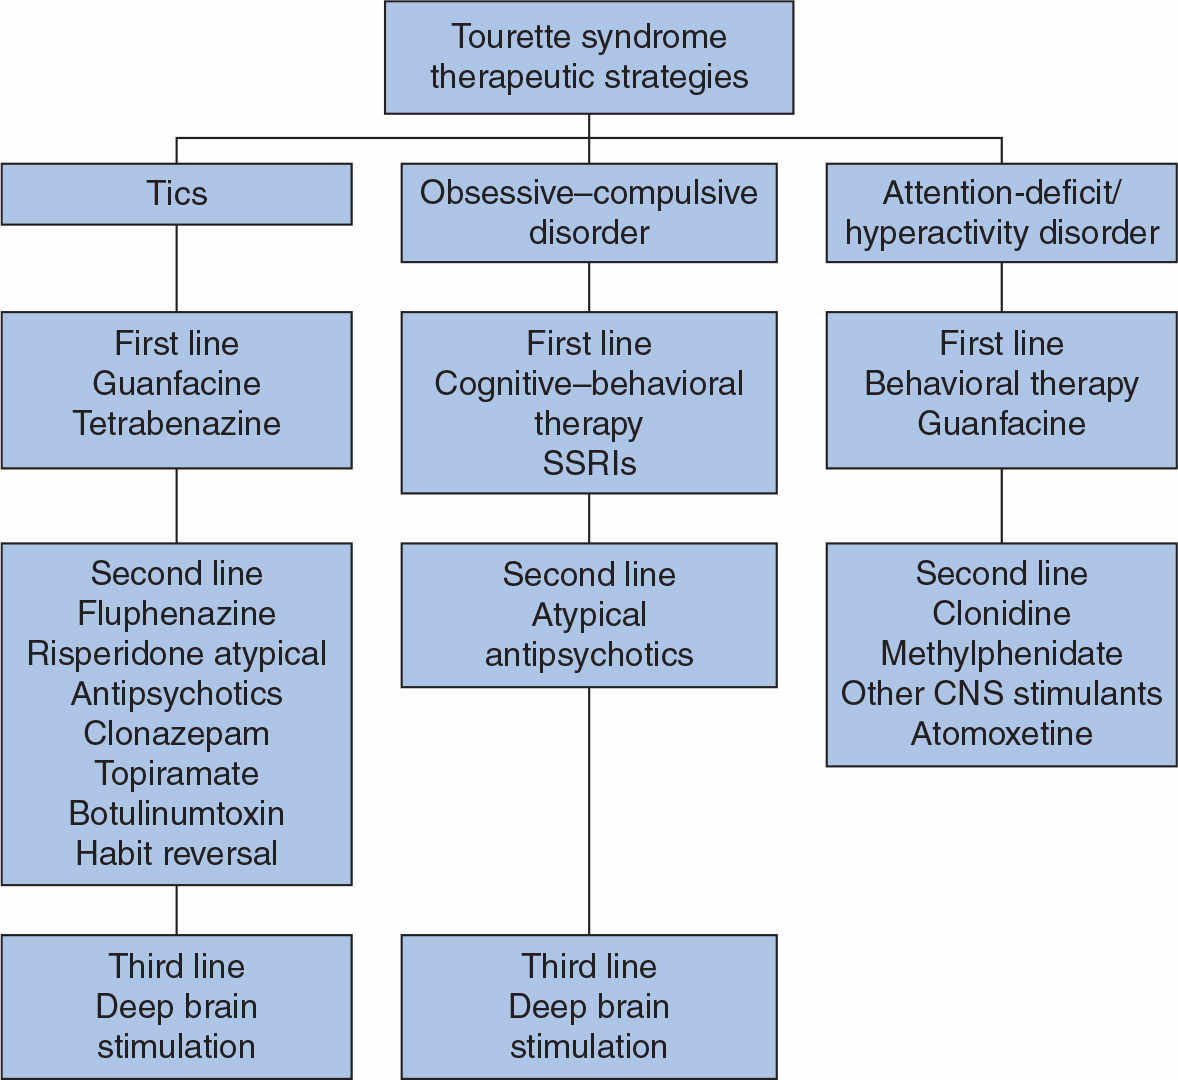 (Modified Jankovic J, Kurlan R. Tourette syndrome: evolving concepts. 